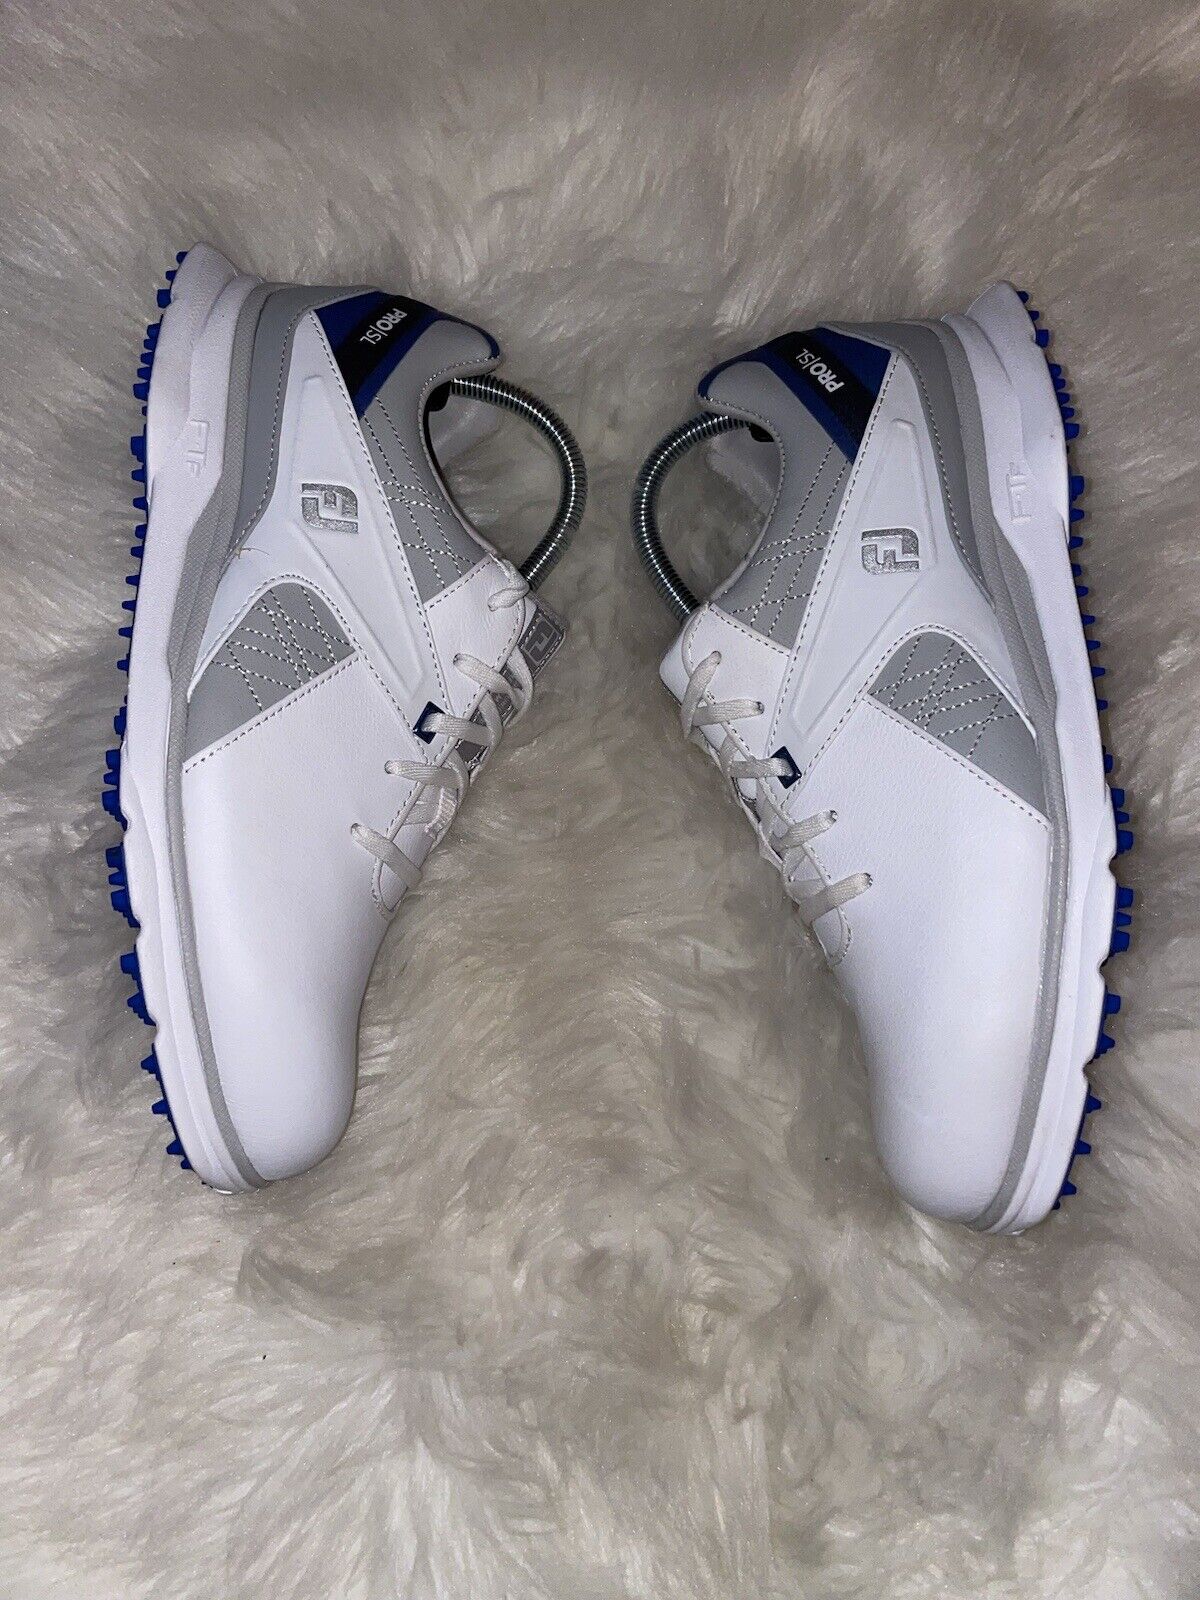 Footjoy FJ Pro SL White Blue Leather Spikeless Golf Shoes 53811 Men’s Size 8M